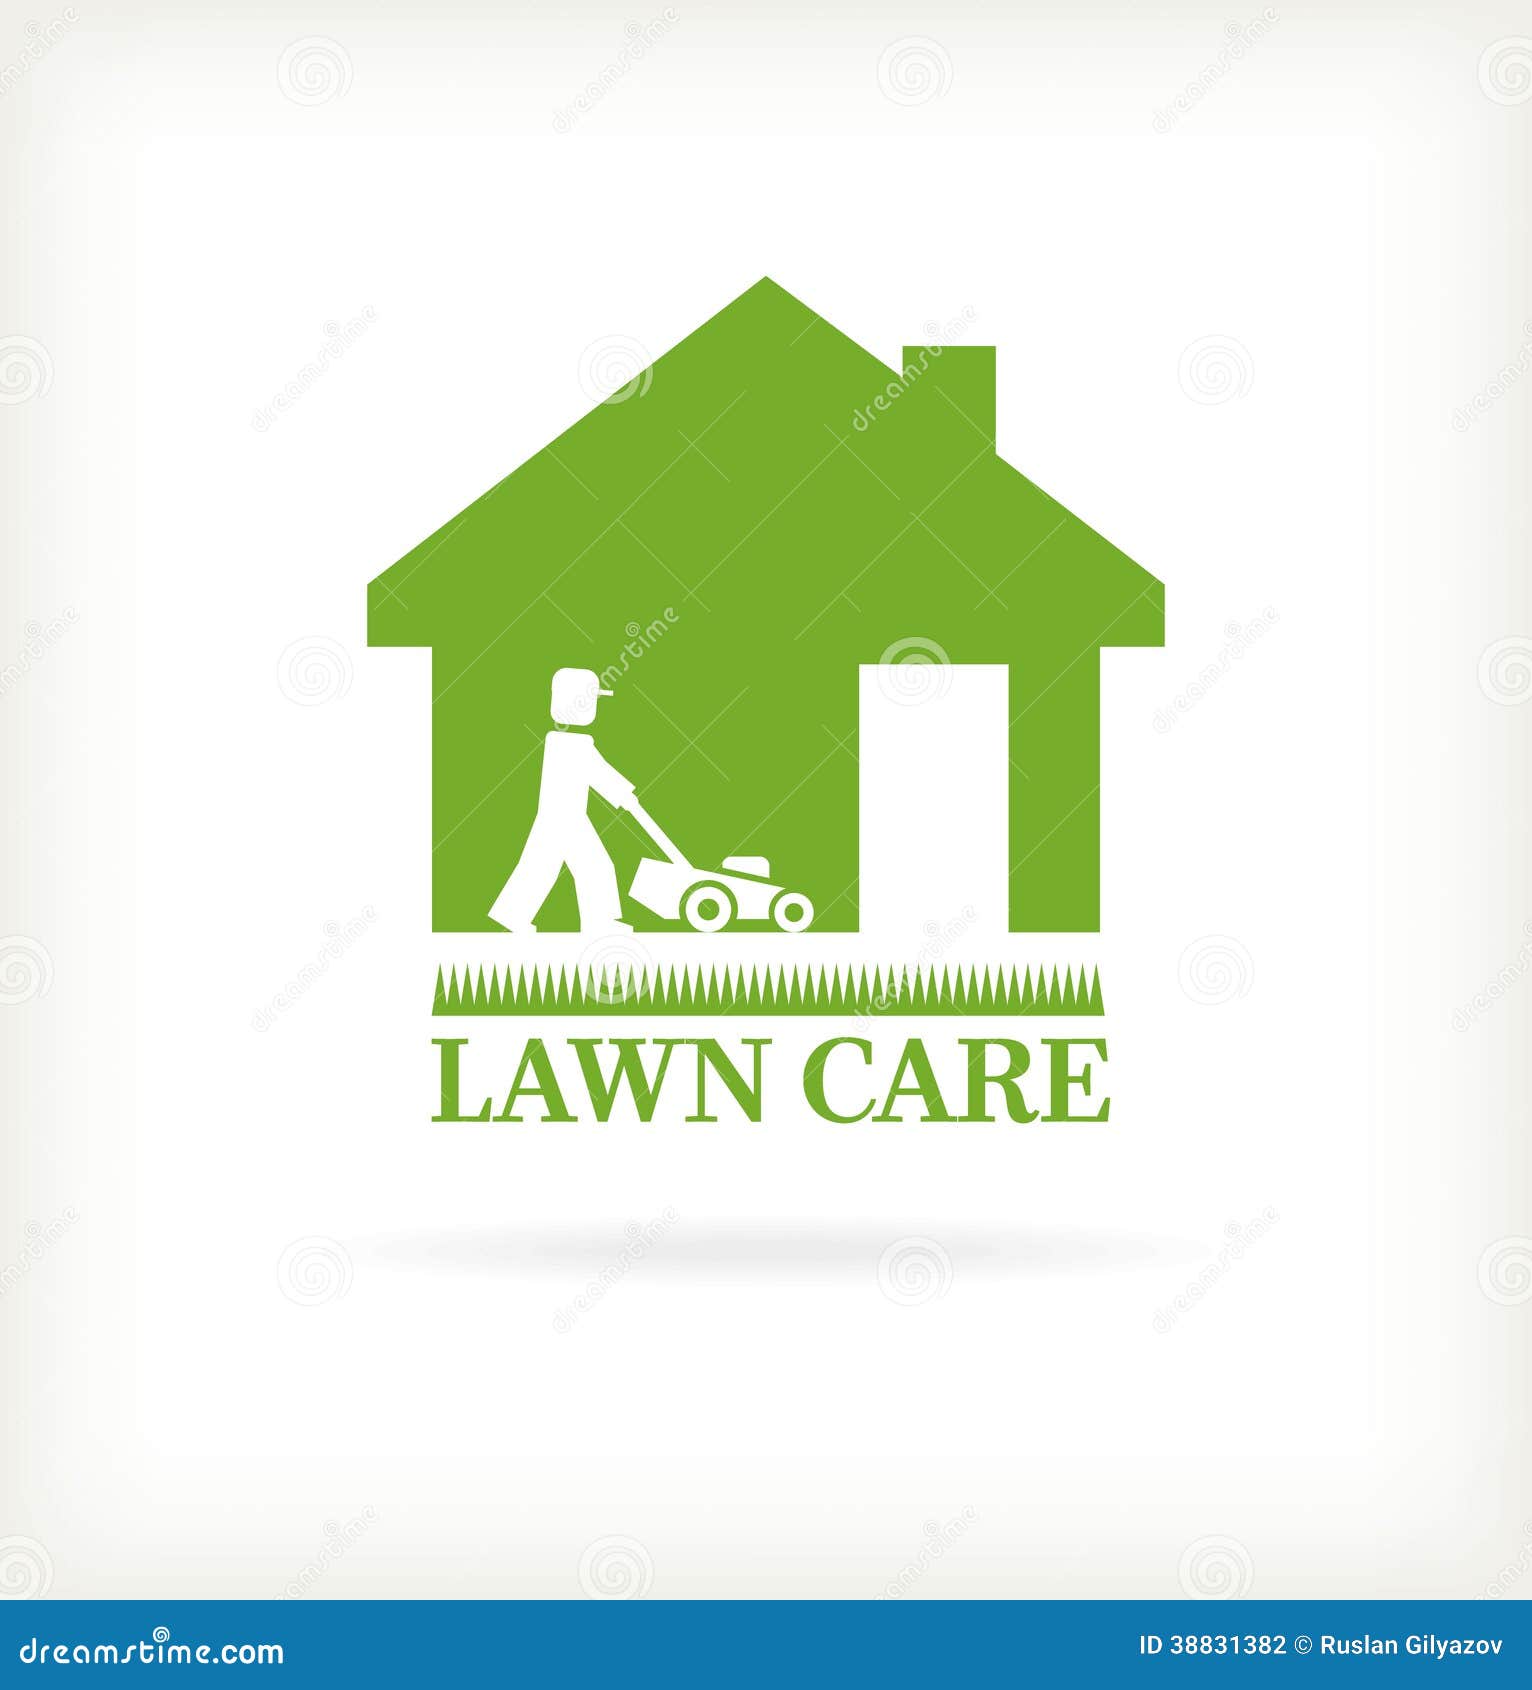 Lawn care symbol. Vector illustration.